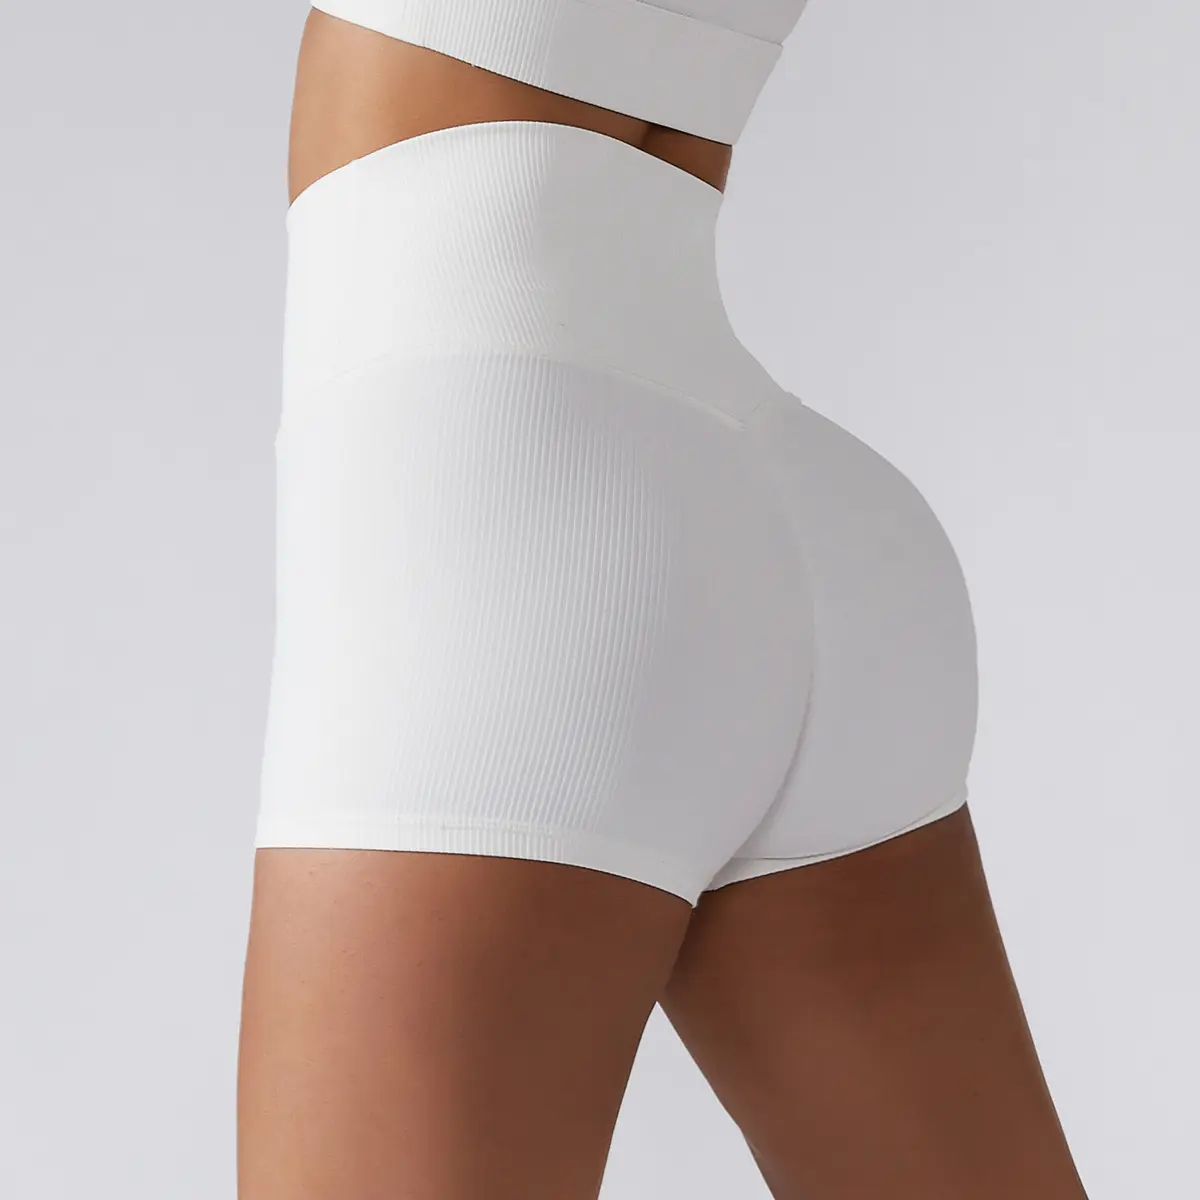 New Tummy Control fitness shorts yoga plus size women's shorts high waist slimming anti-squat compression pants mesh shorts